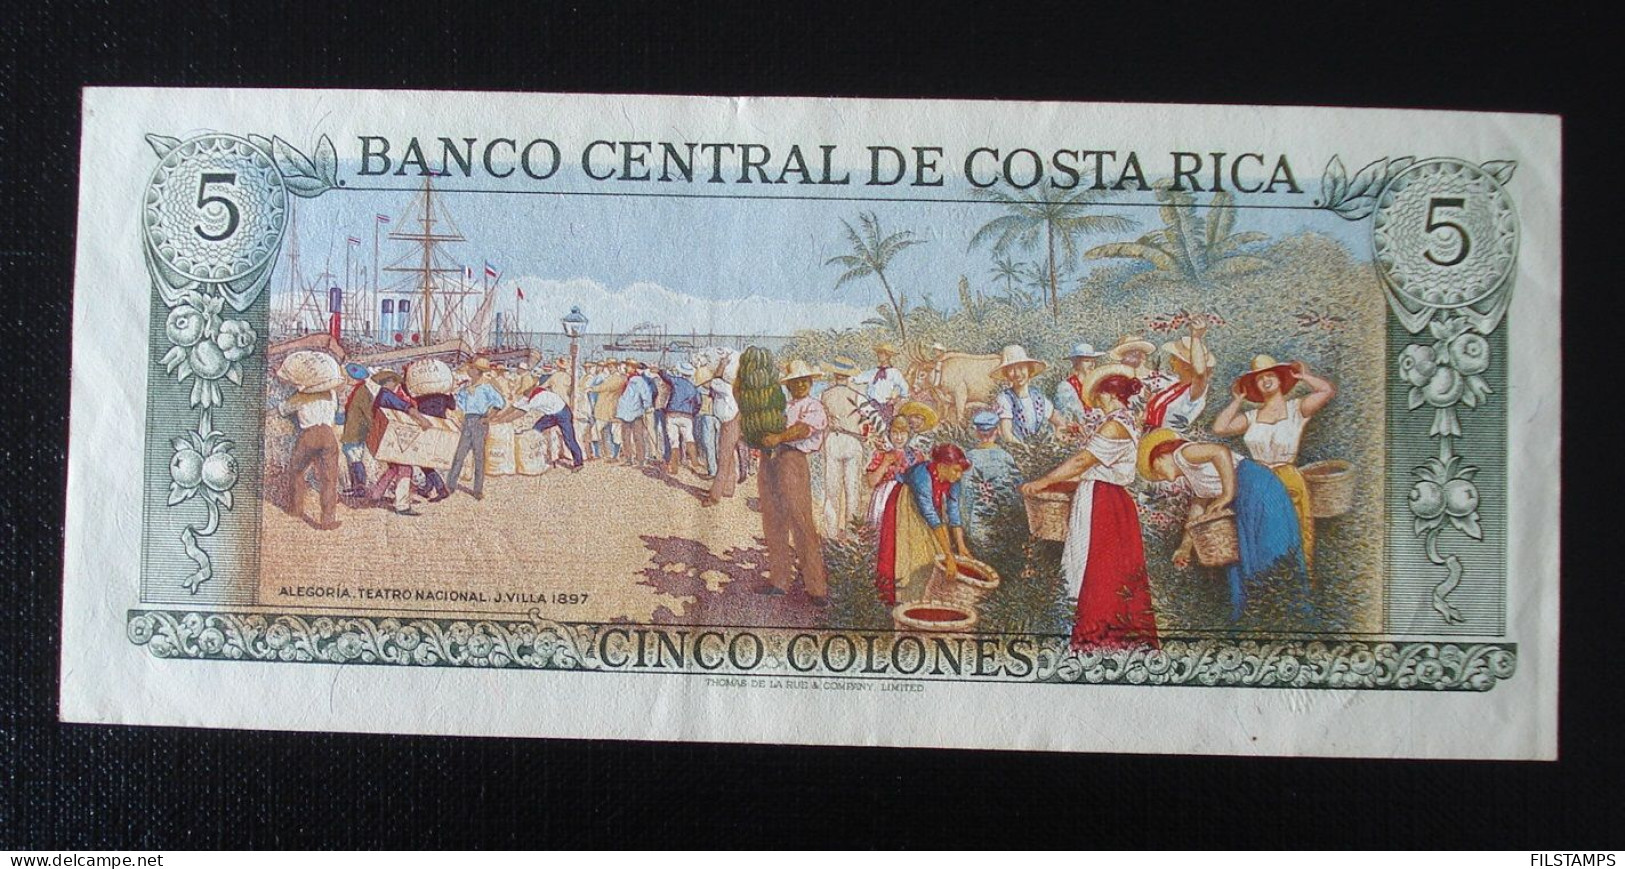 COSTA RICA 5 COLONES 1992. AUNCIRCULATED. BANKNOTE - Costa Rica